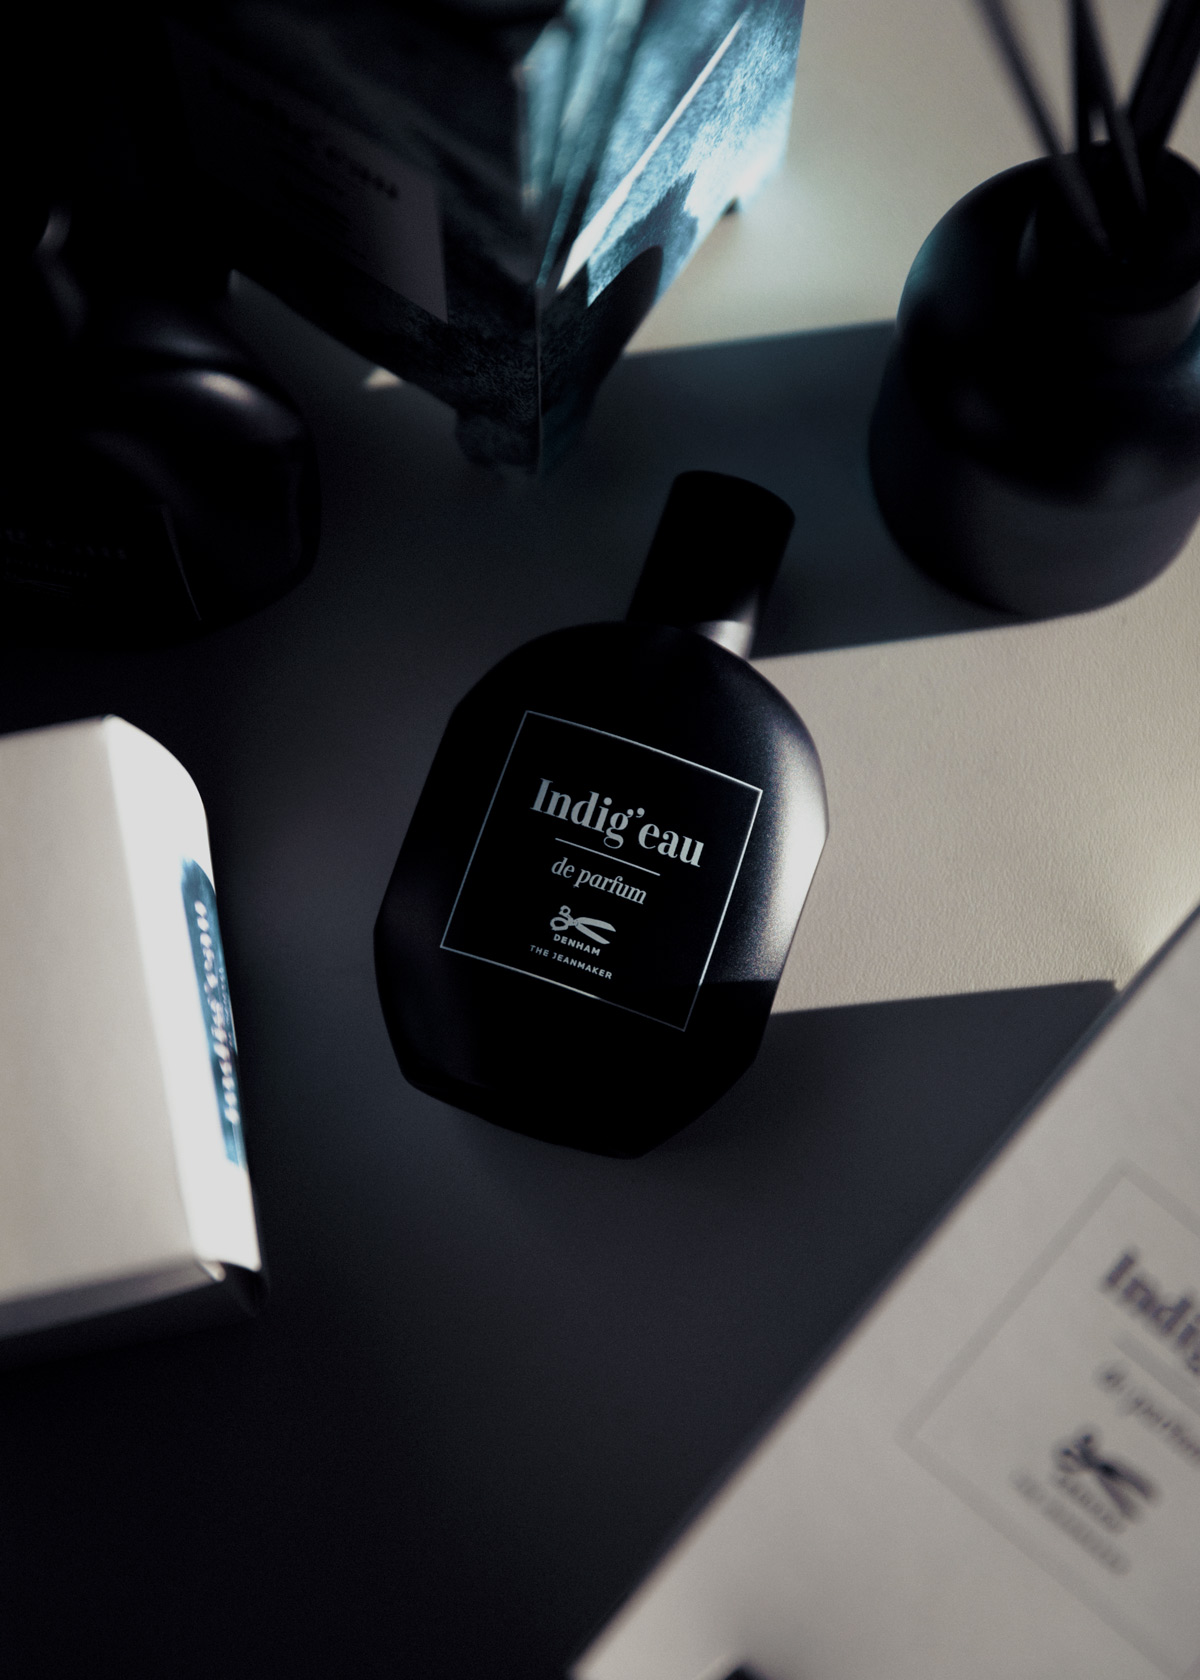 Indig'eau: DENHAM's new signature fragrance.